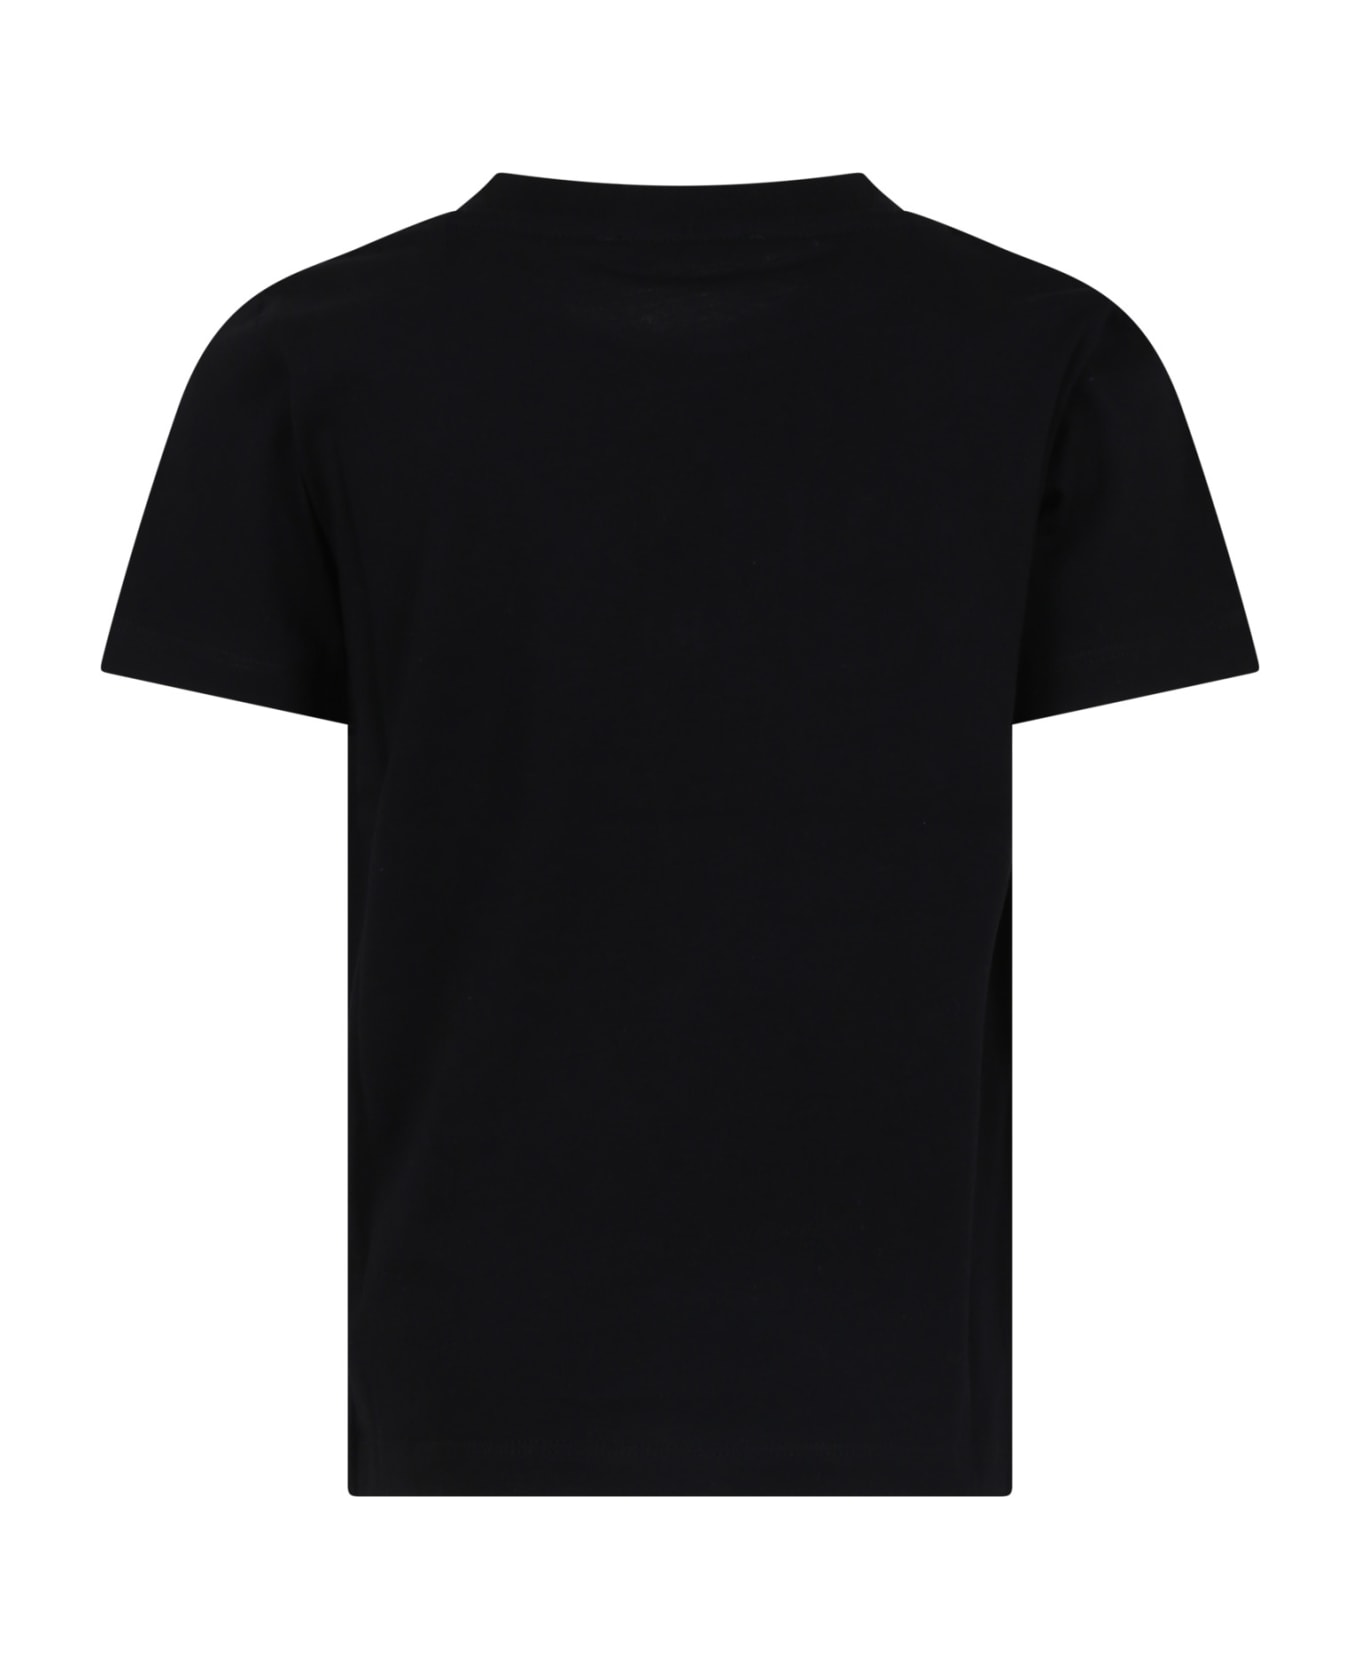 Balmain Black T-shirt For Kids With White Logo - Black